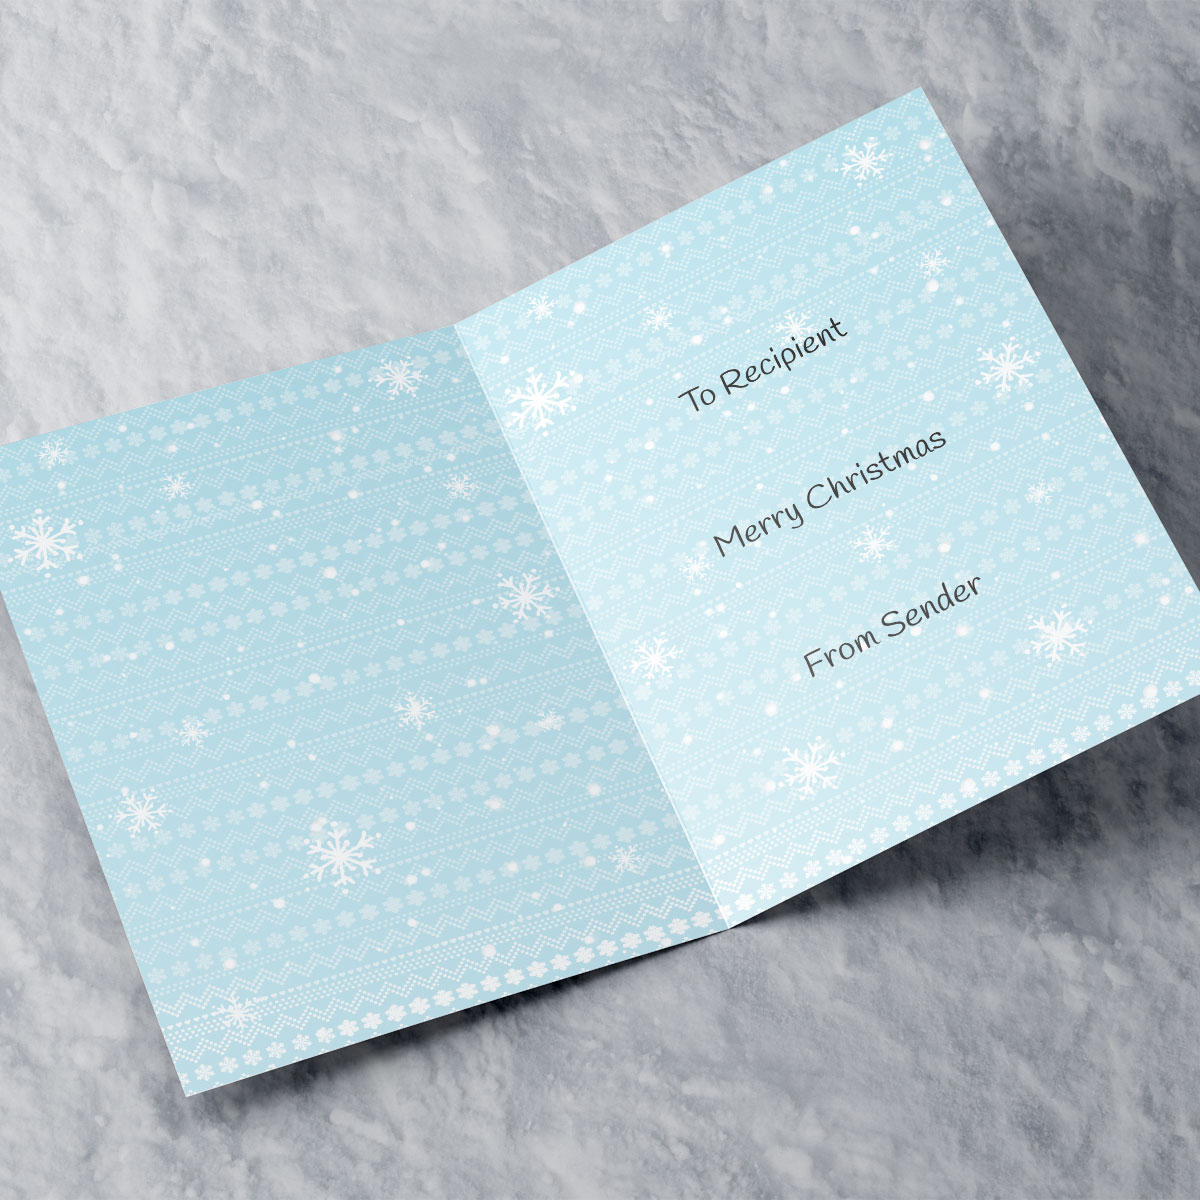 Personalised Christmas Card - Grandson Snowman